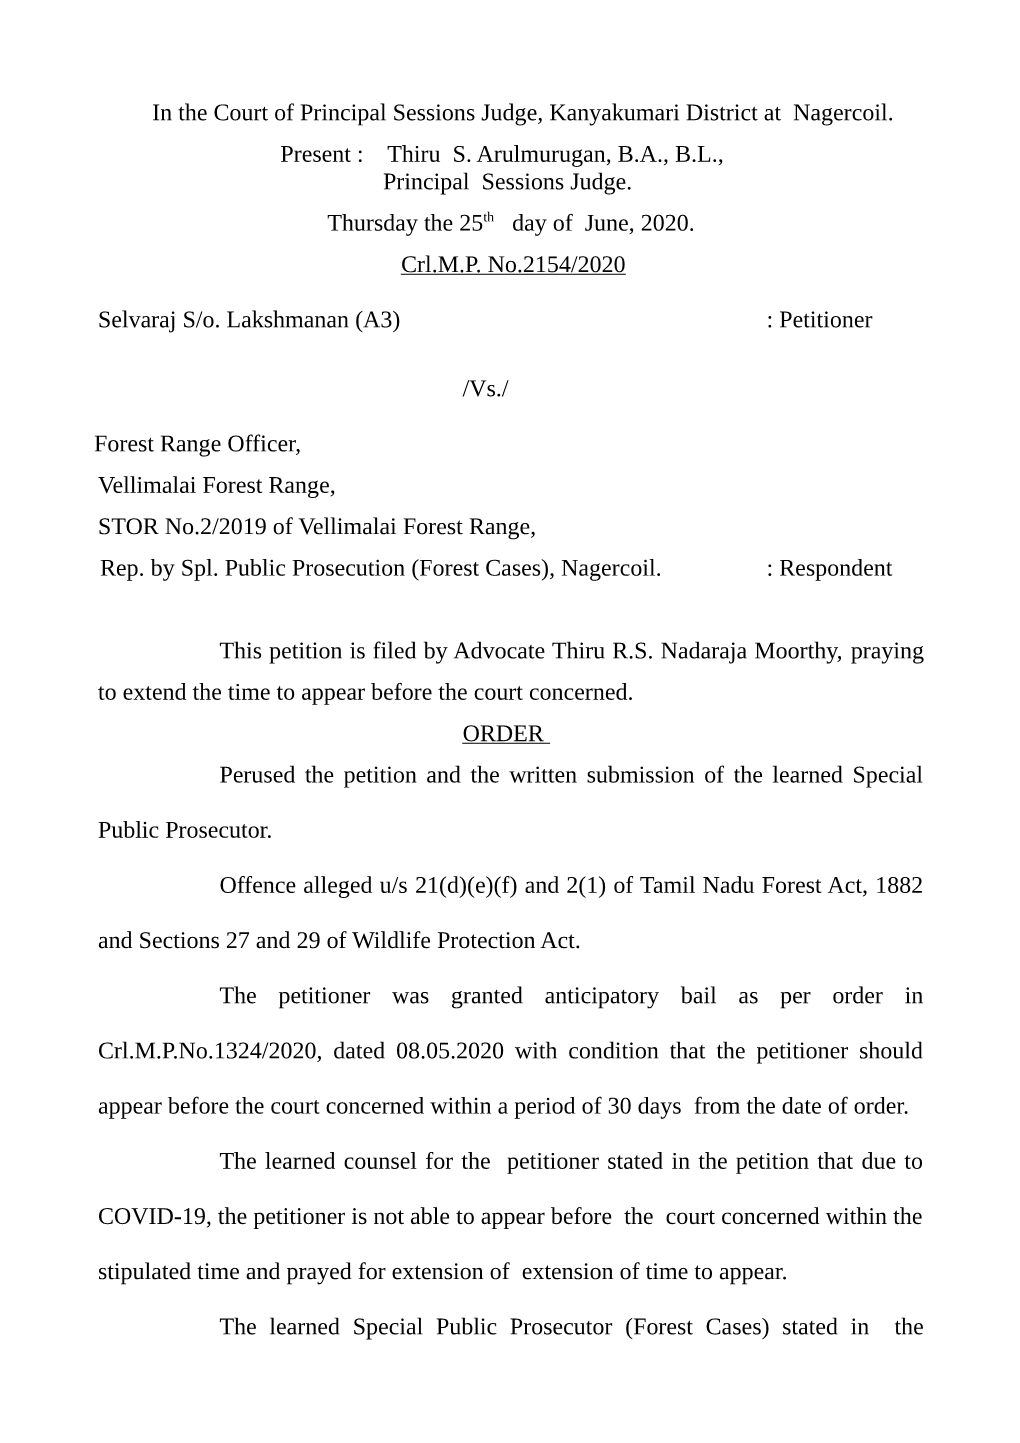 In the Court of Principal Sessions Judge, Kanyakumari District at Nagercoil. Present : Thiru S